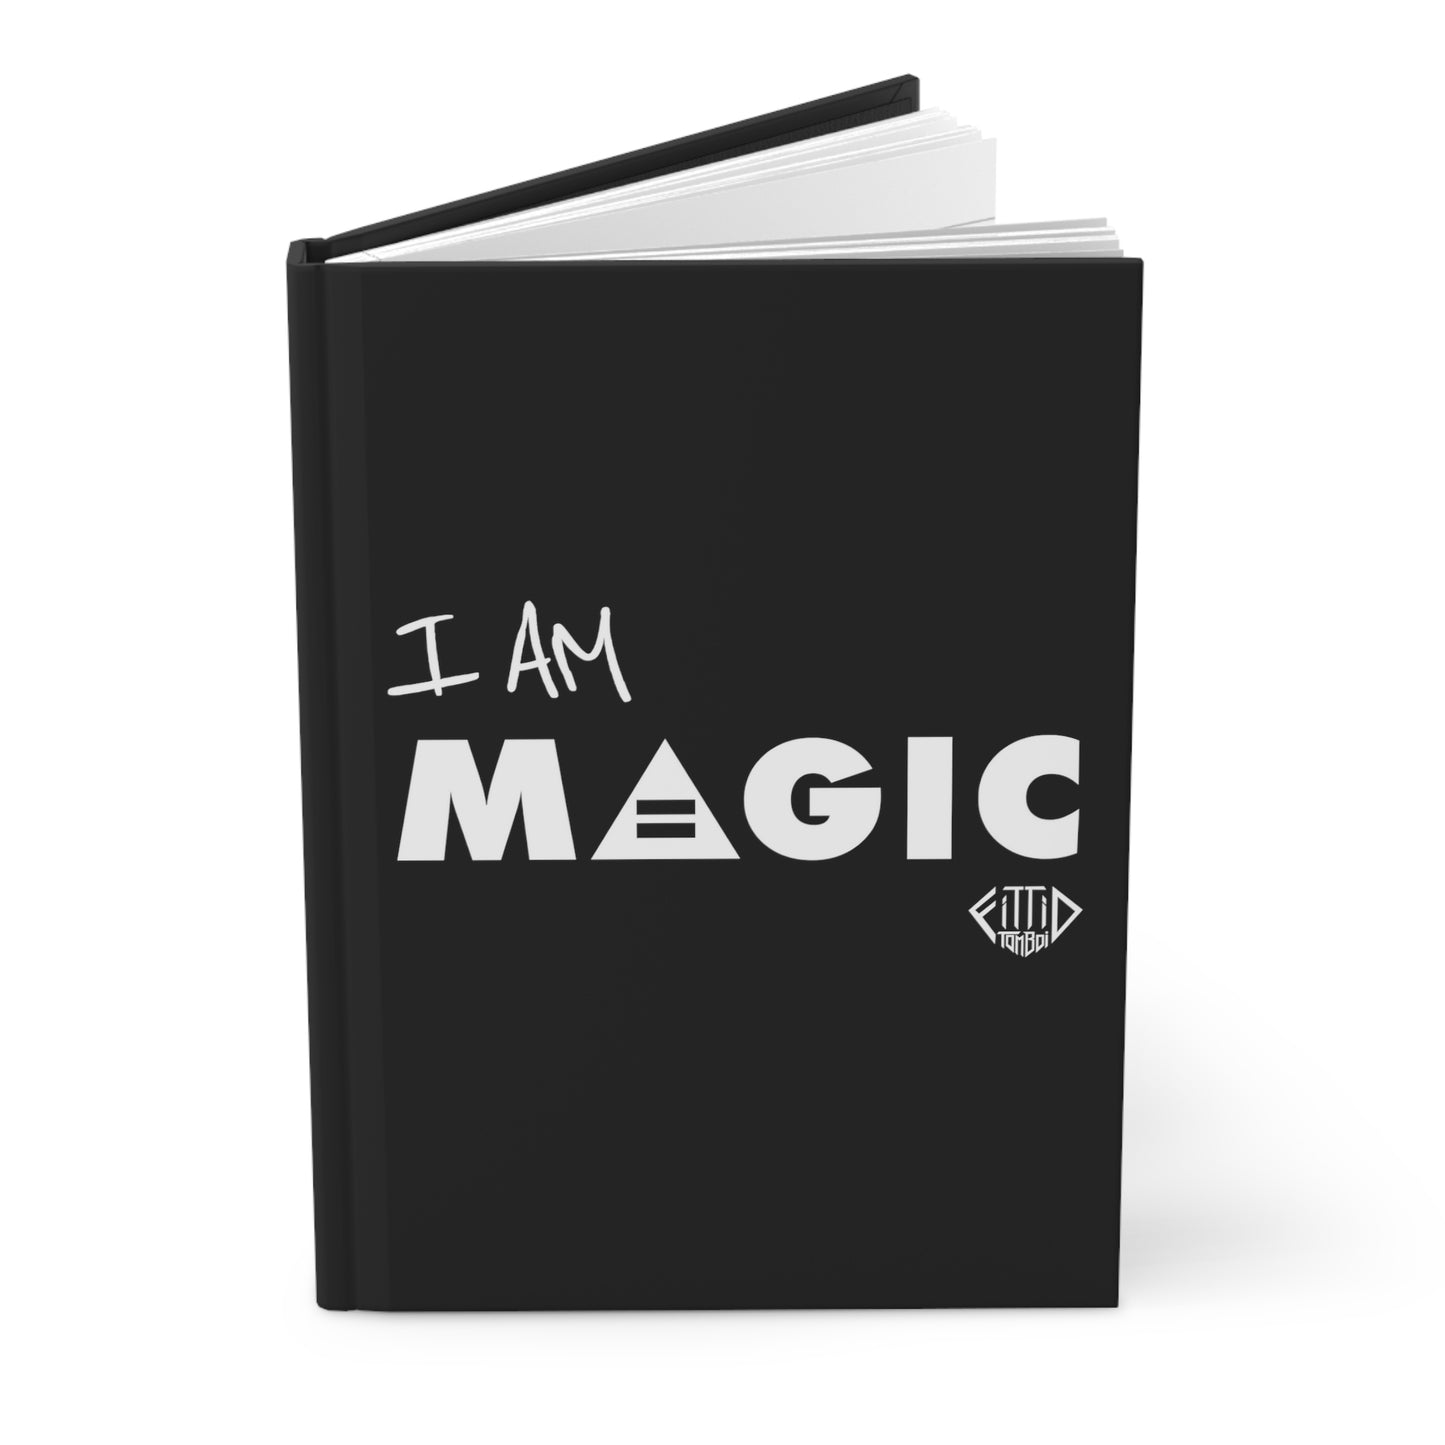 I AM MAGIC Journal Hardcover - Black